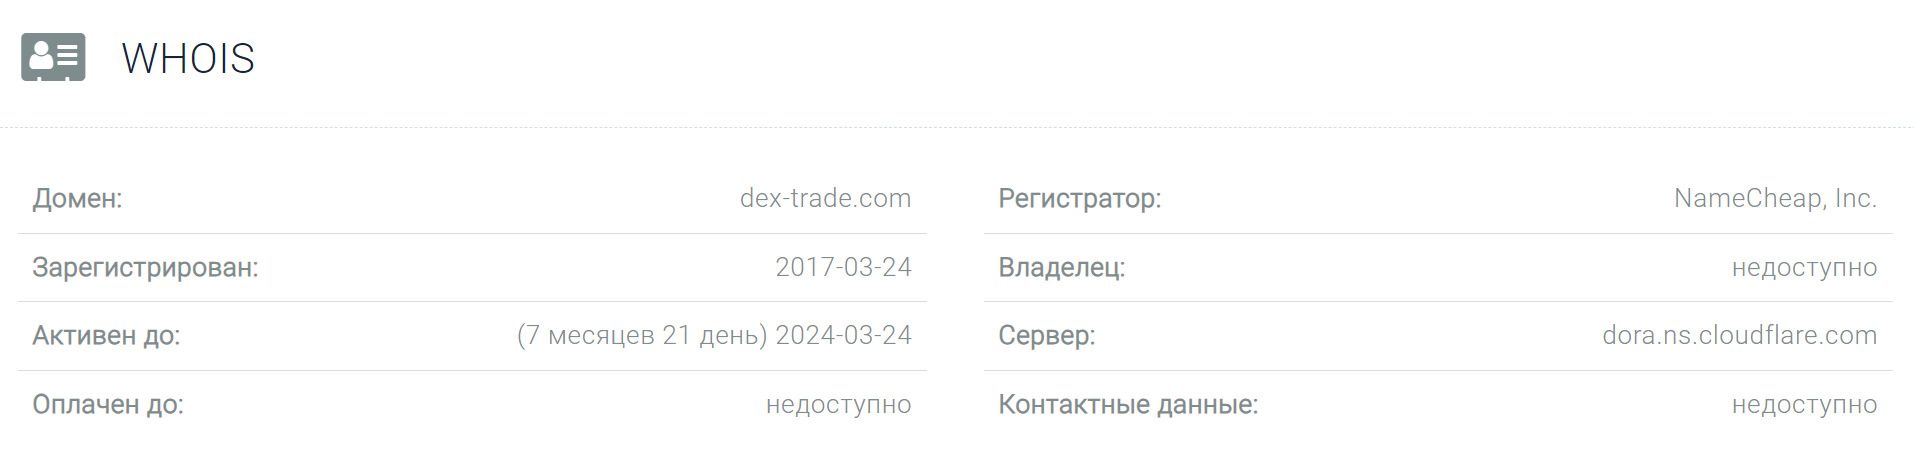 Проверка биржи Dex Trade